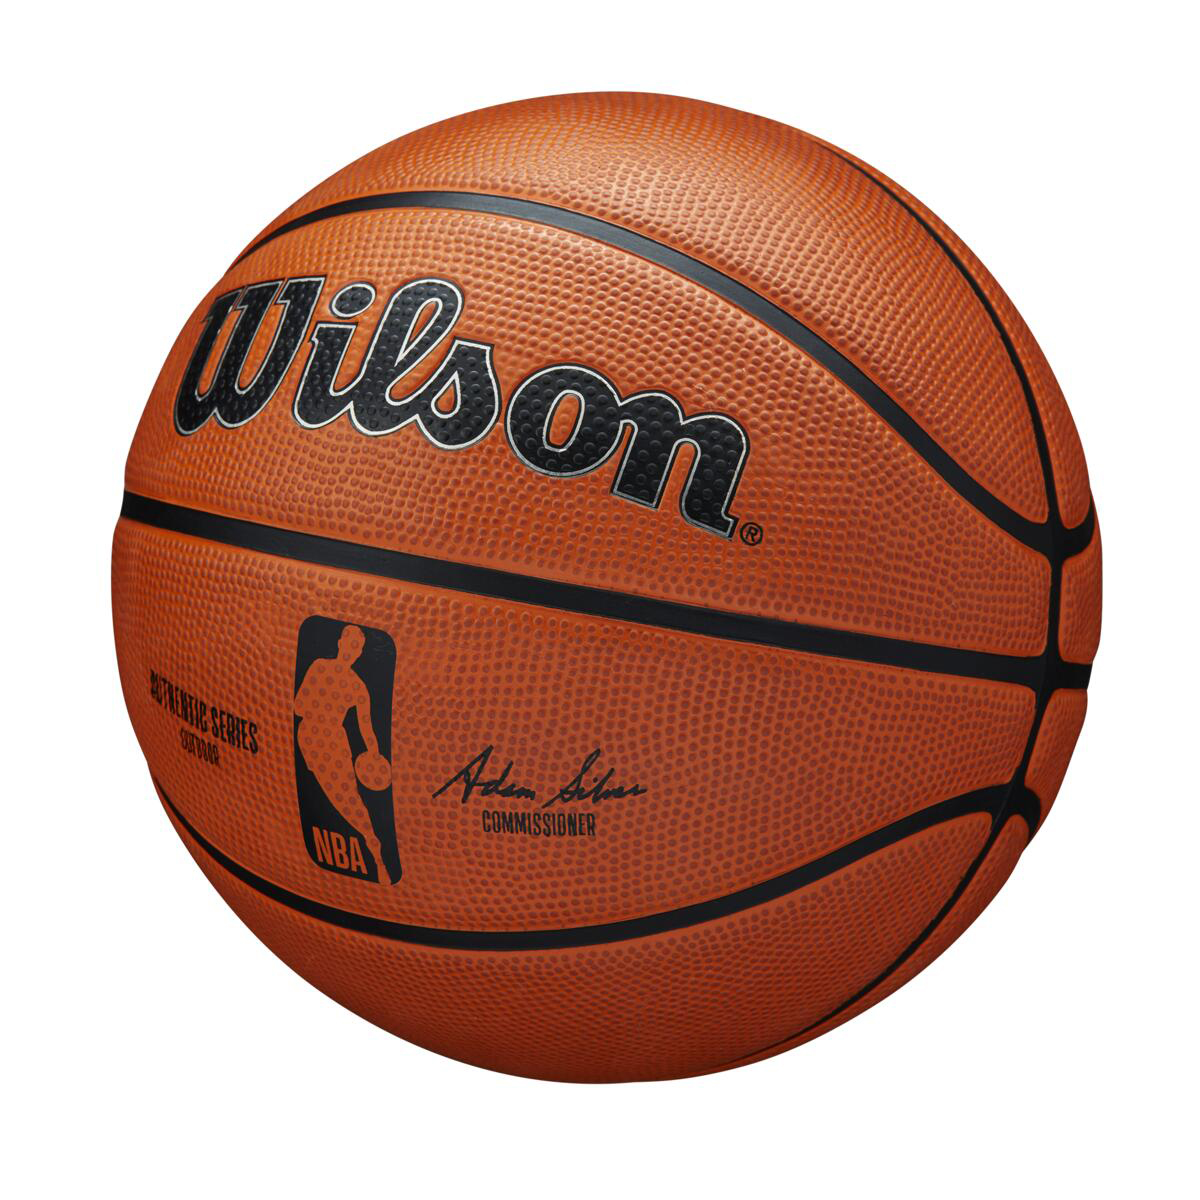 WILSON NBA AUTHENTIC OUTDOOR BASKETBALL